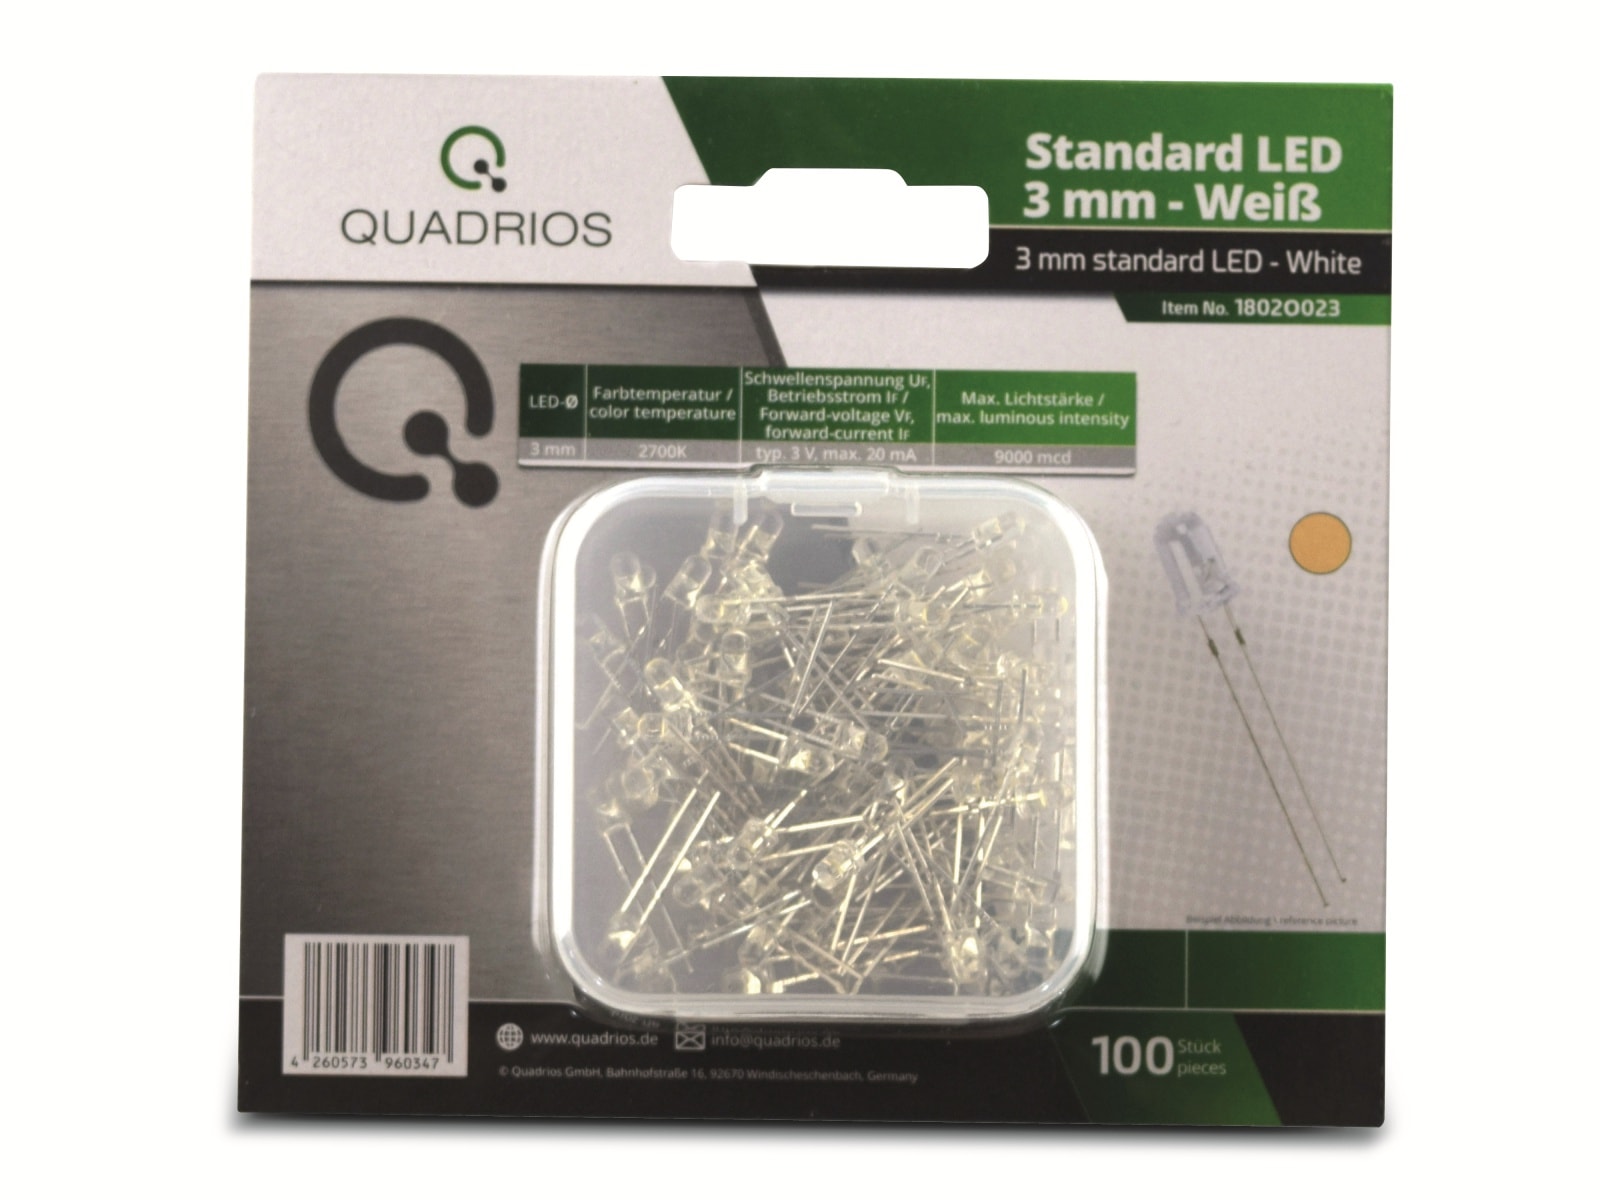 QUADRIOS, 1802O023, LED Sortiment 3 mm Leuchtdioden Warmweiss (9000 mcd) 100 tlg